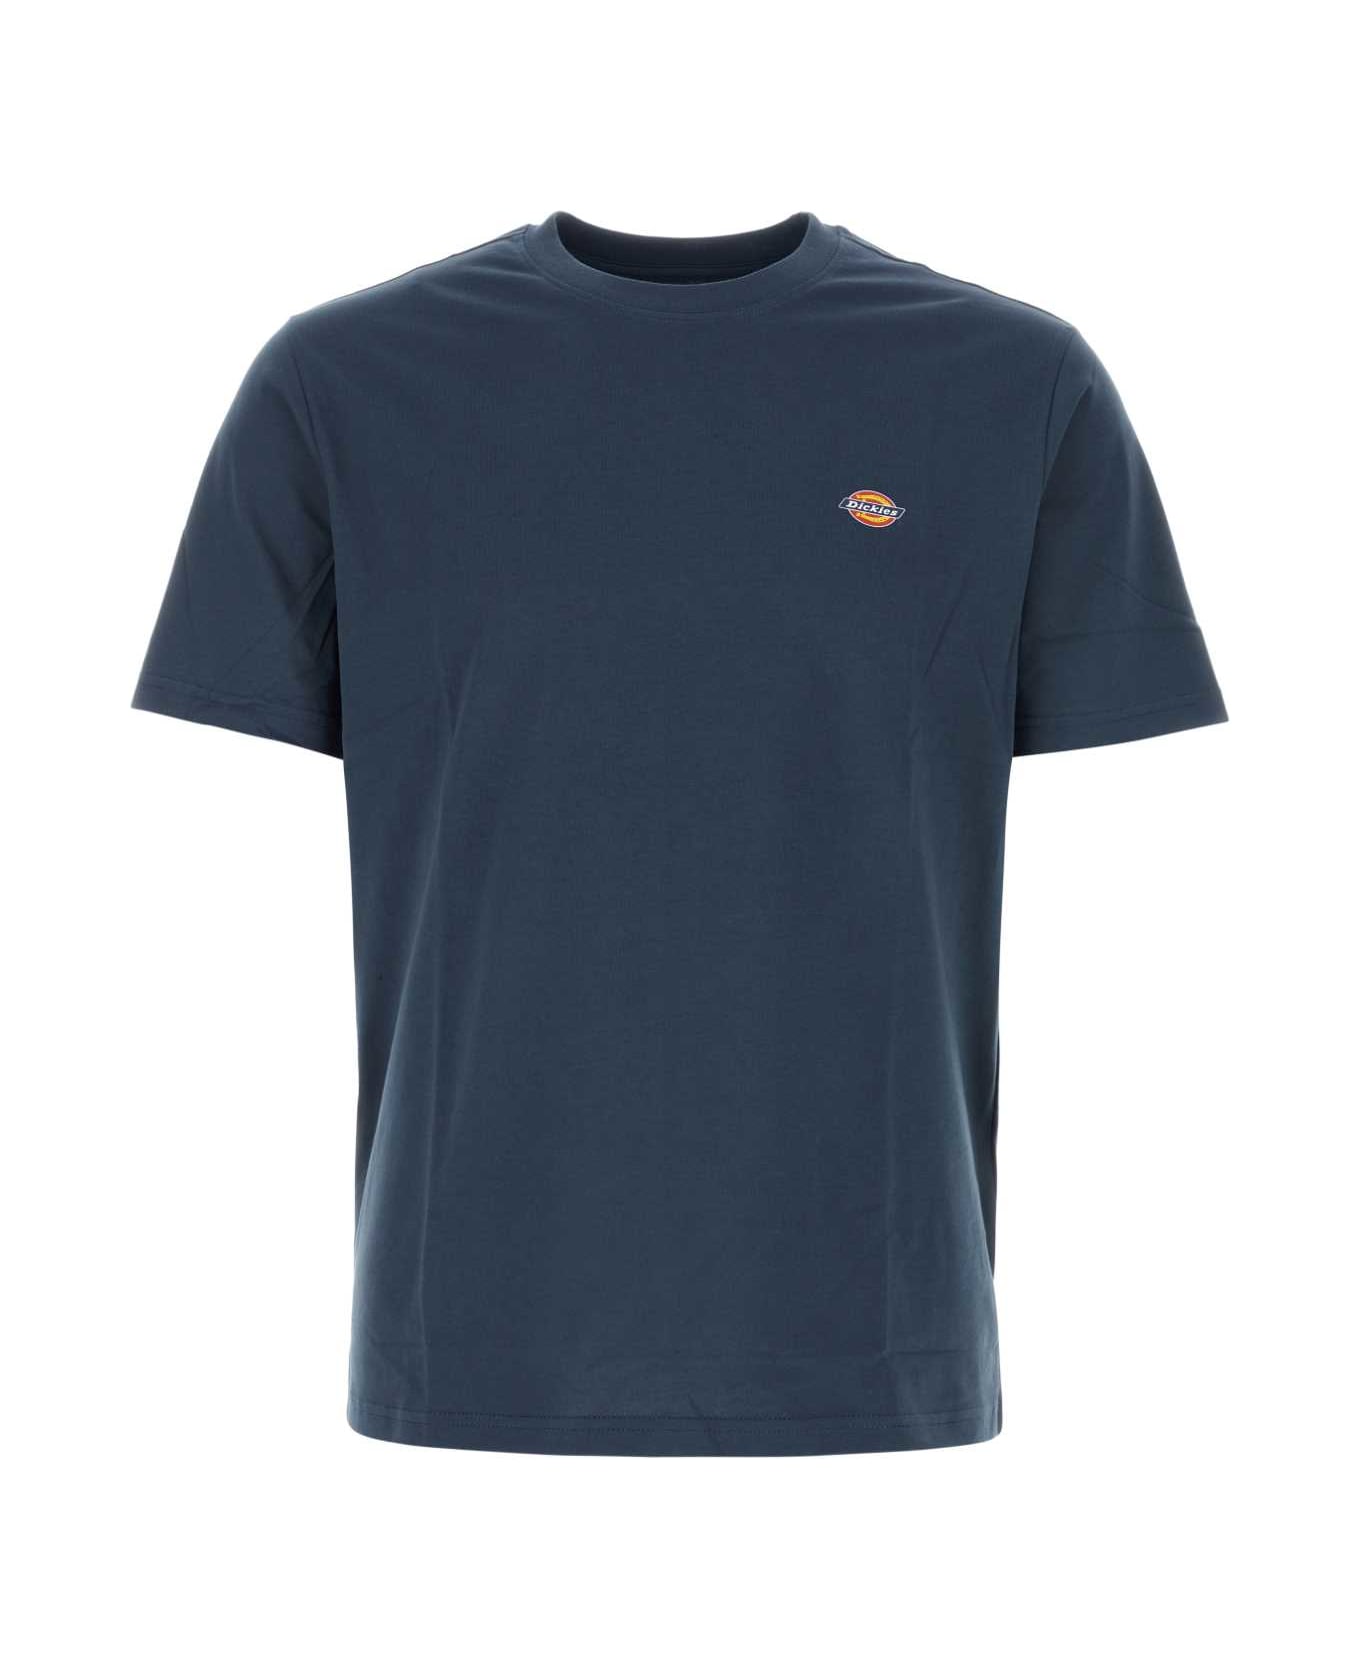 Dickies Navy Blue Cotton Mapleton T-shirt - DARKBROWN